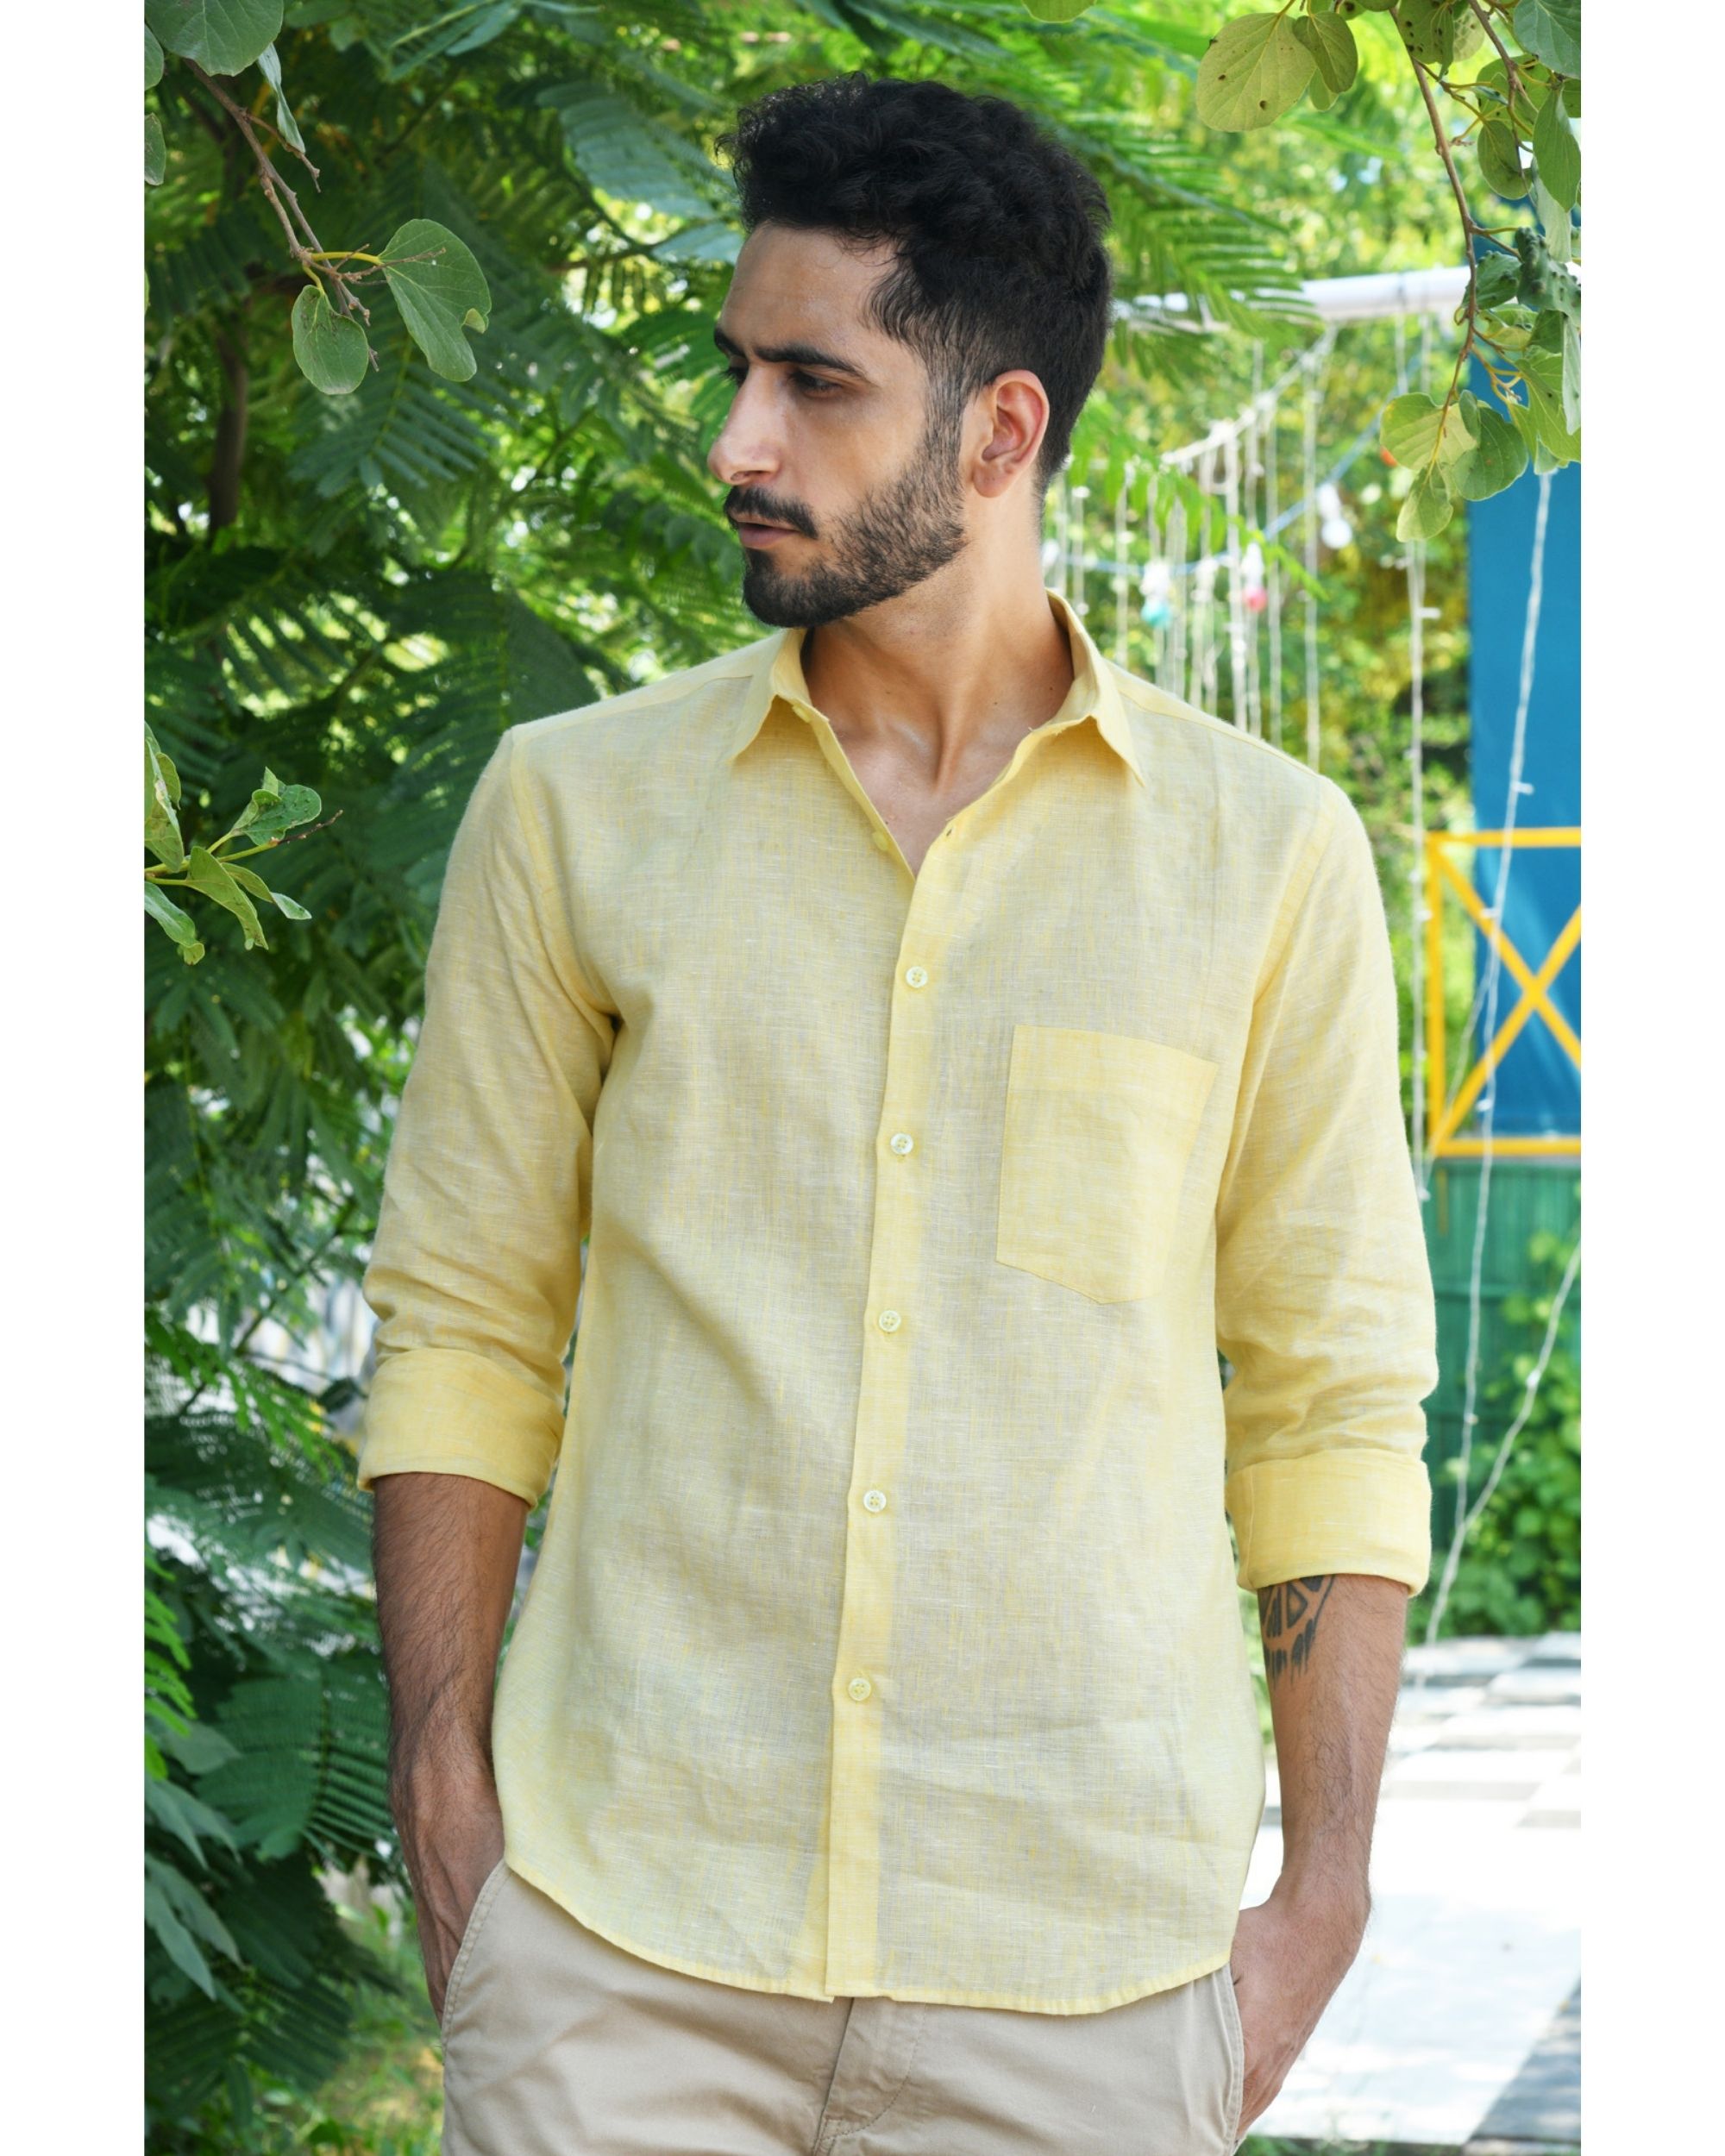 Pastel yellow linen shirt by Prints Valley | The Secret Label